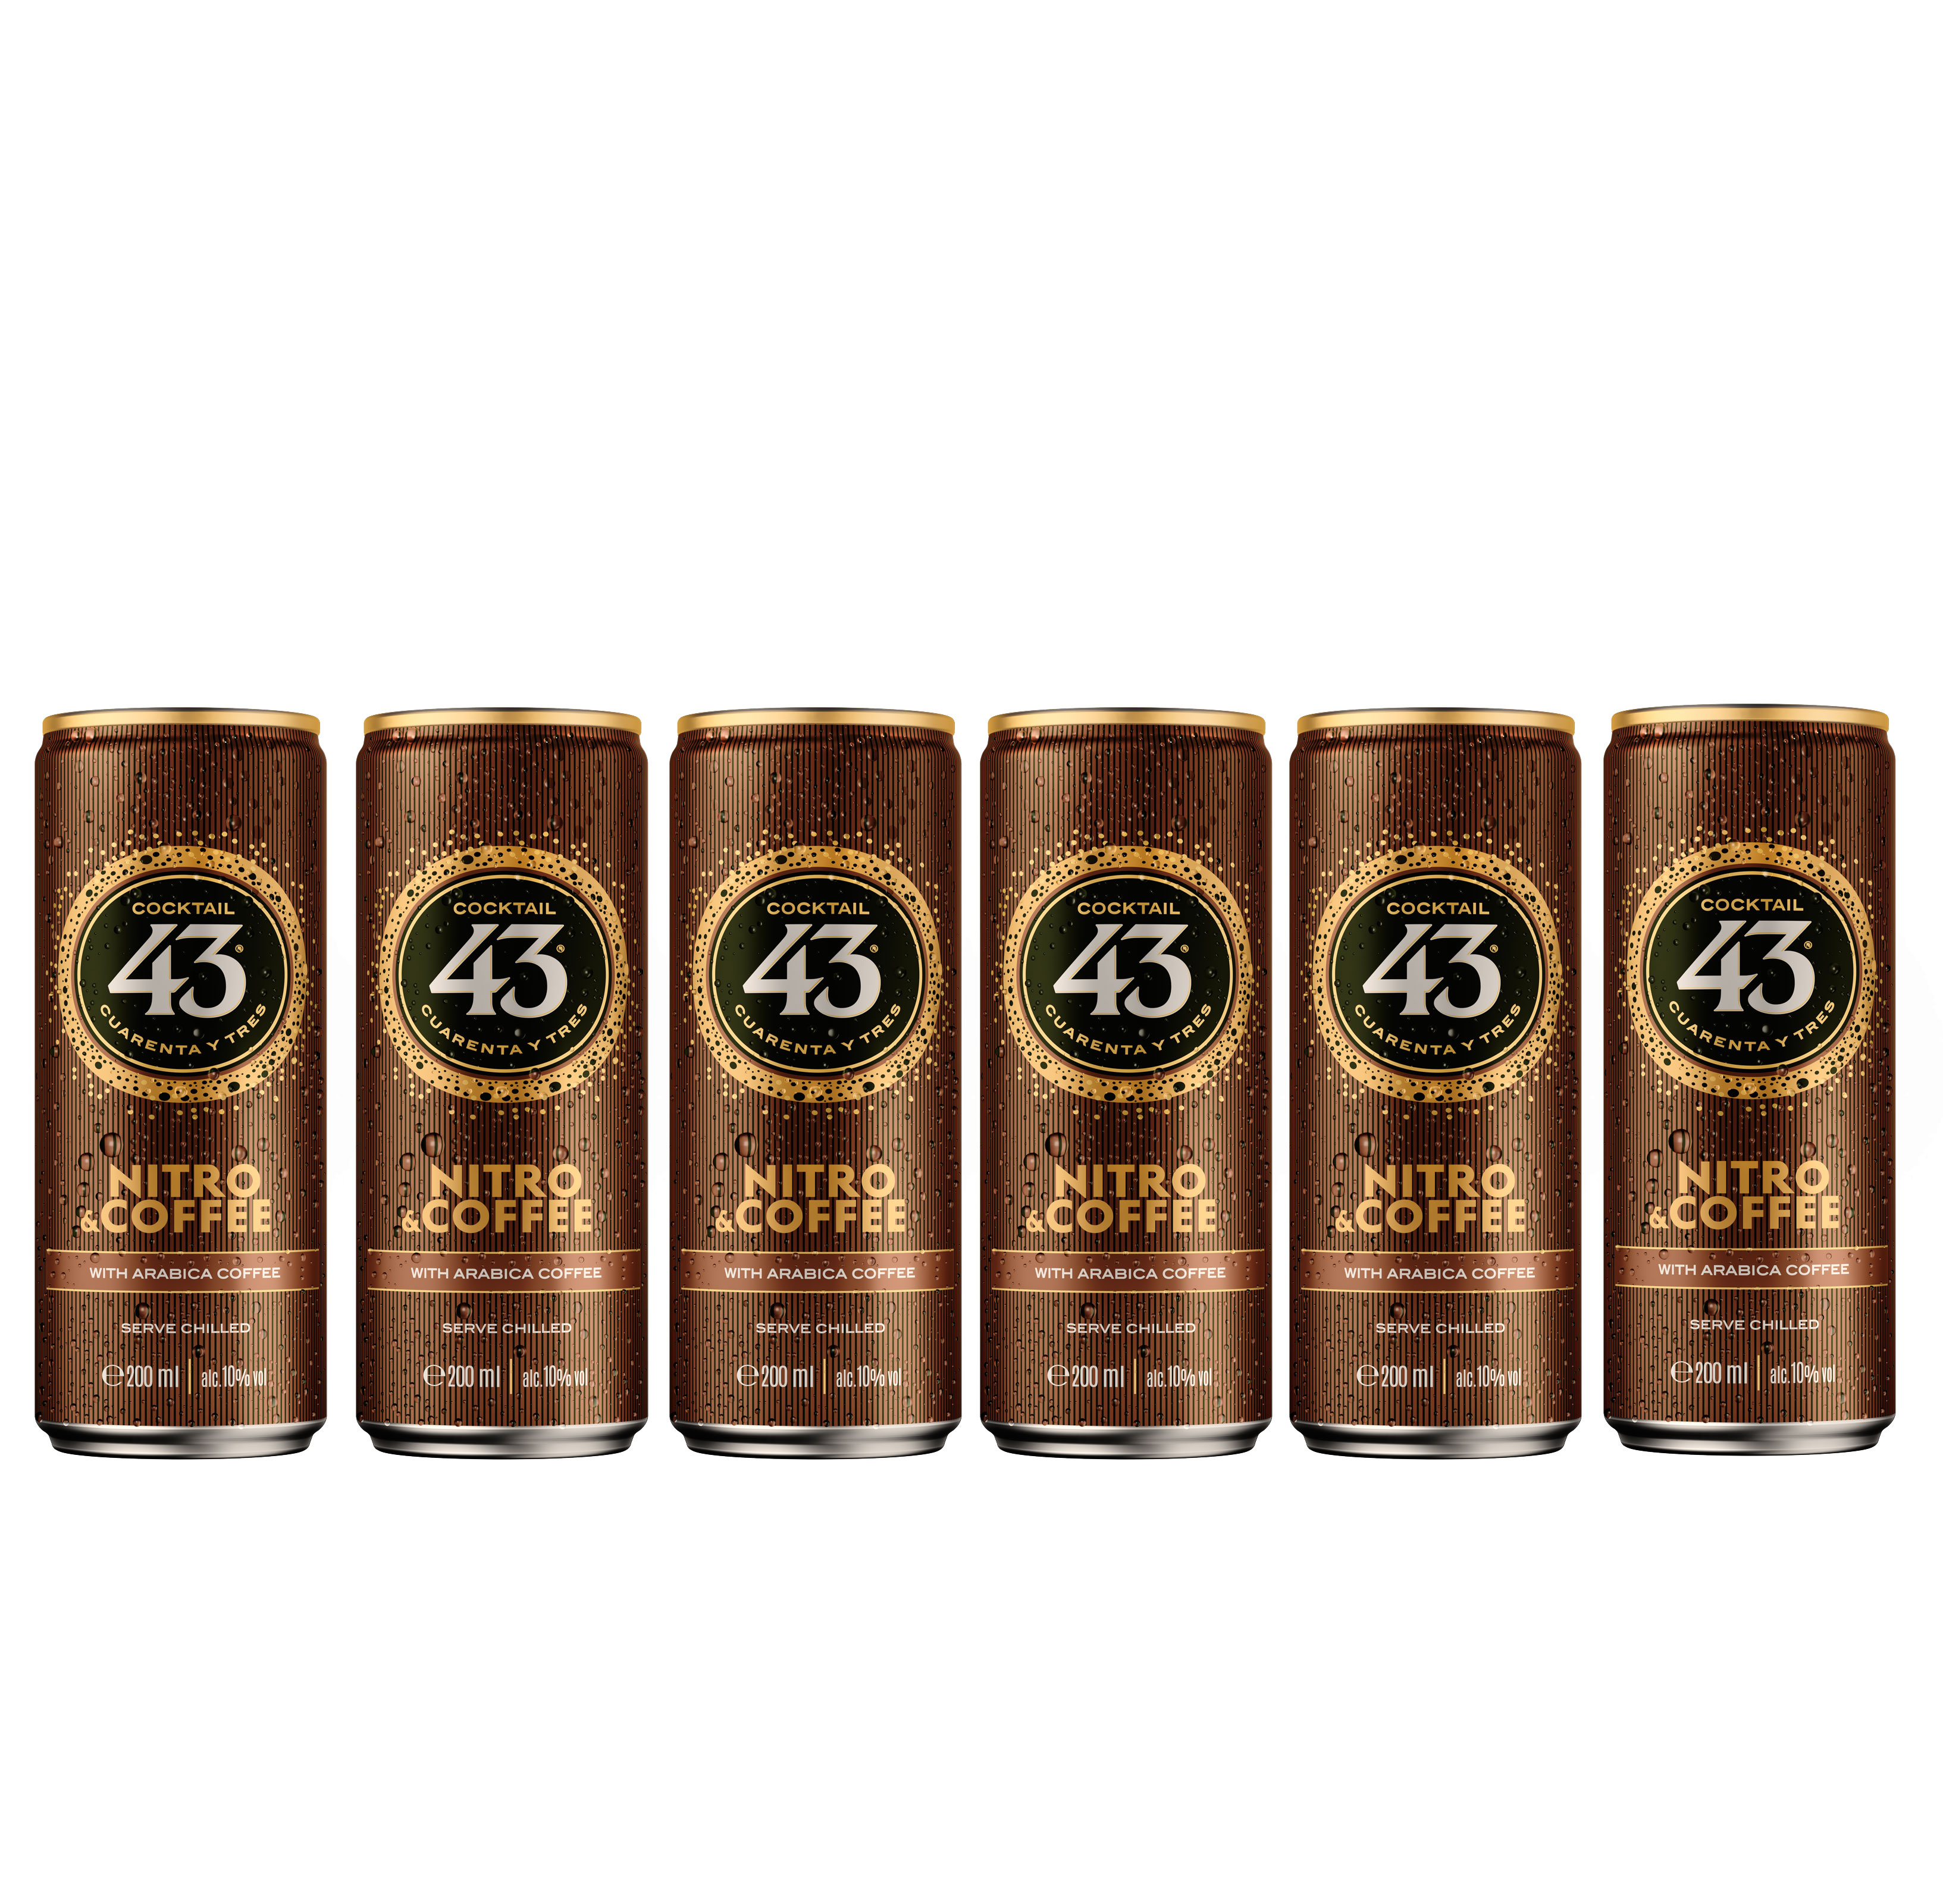 Licor 43 6er Set Nitro und Coffee 6x 0,2L (10% Vol) inkl. Pfand EINWEG Cocktail Longdrink ready to drink- [Enthält Sulfite]